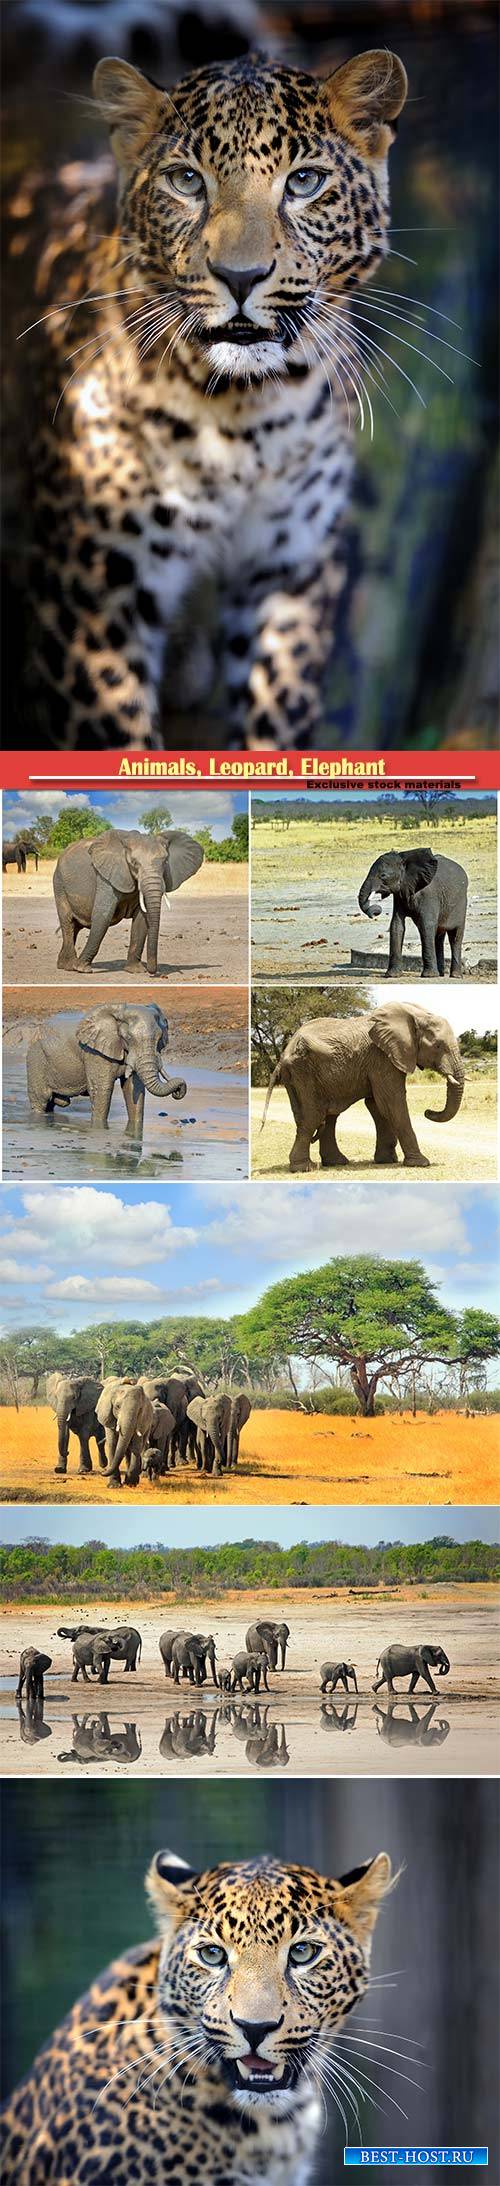 Animals, Leopard, Elephant